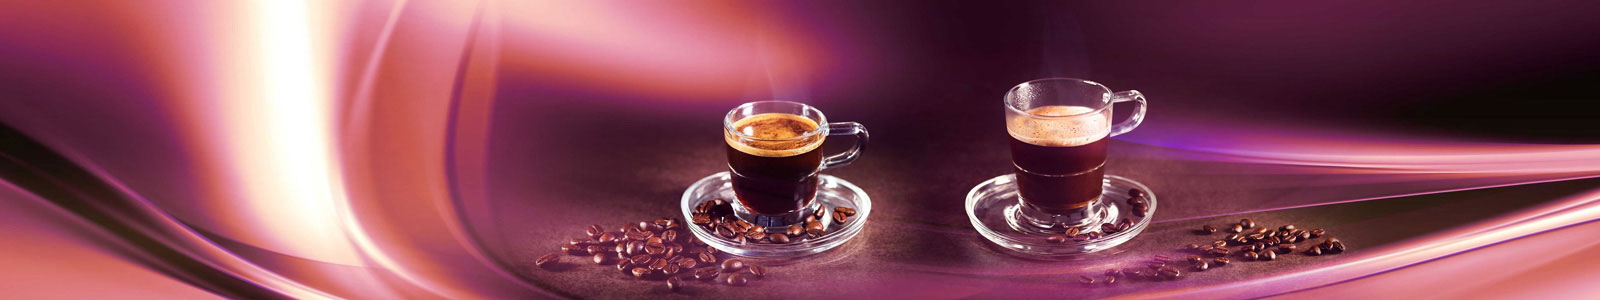 №5981 - Чашки ароматного кофе на абстрактном фоне